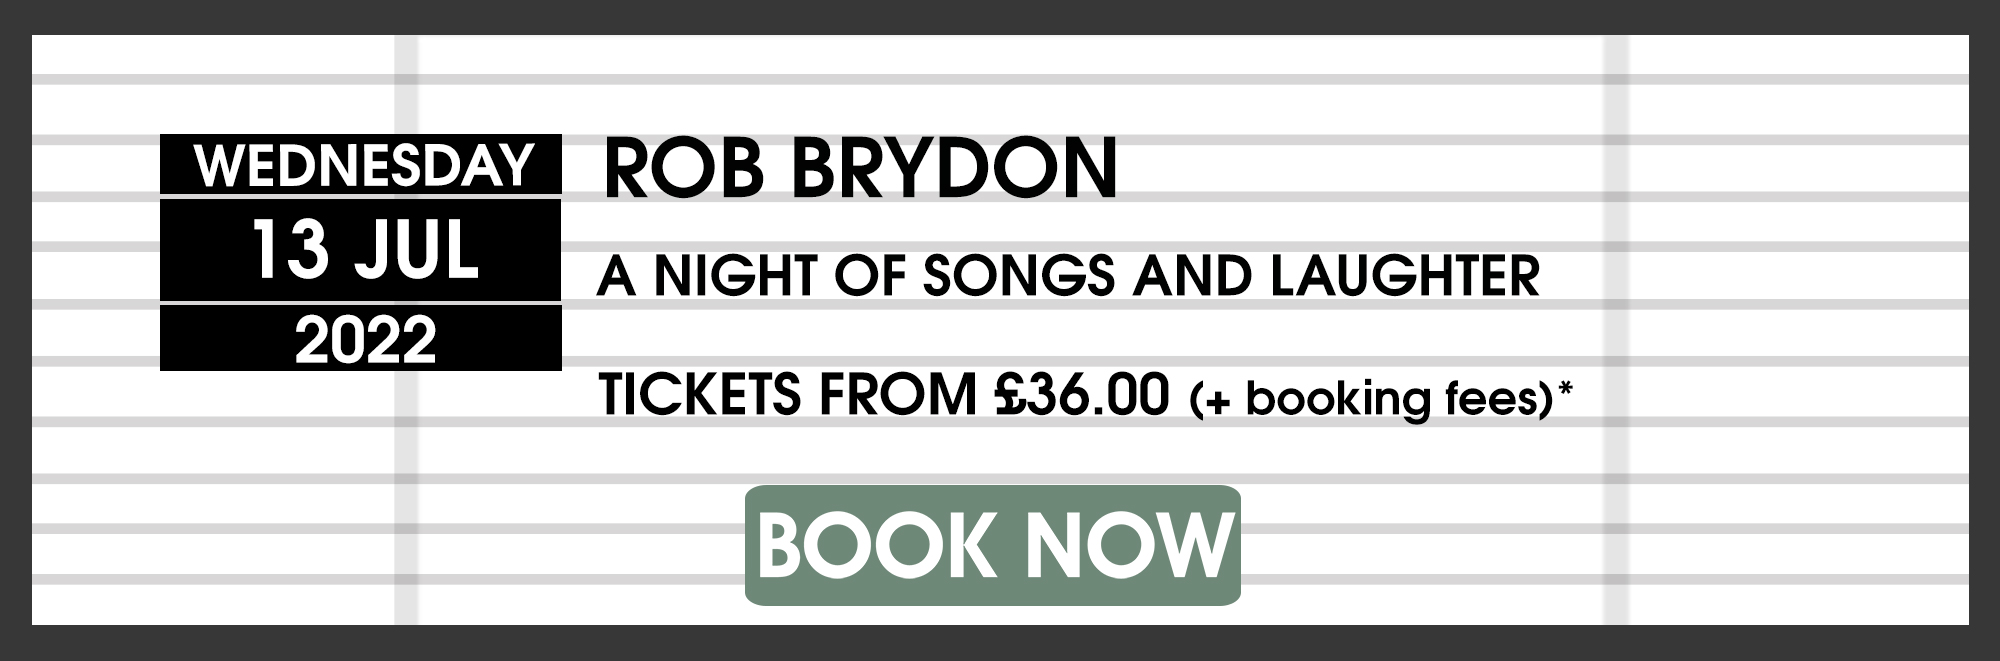 13.07.22 Rob Brydon BOOK NOW